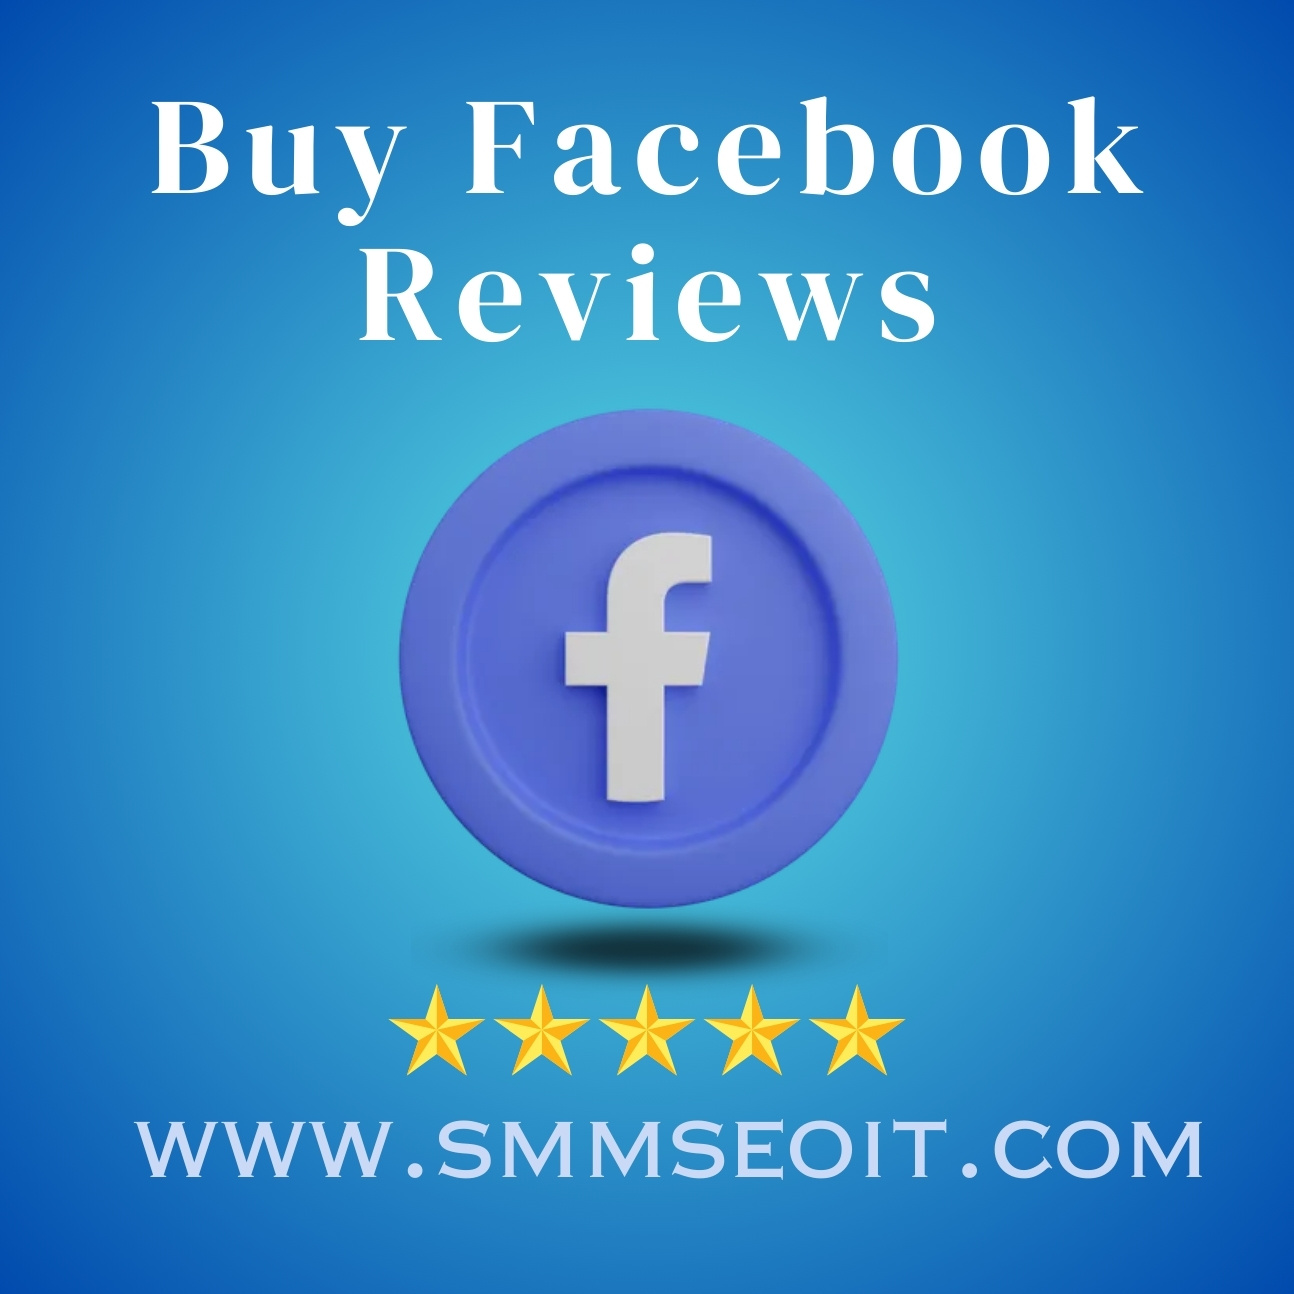 Buy Facebook Reviews - 5 Star Positive Permanent Reviews